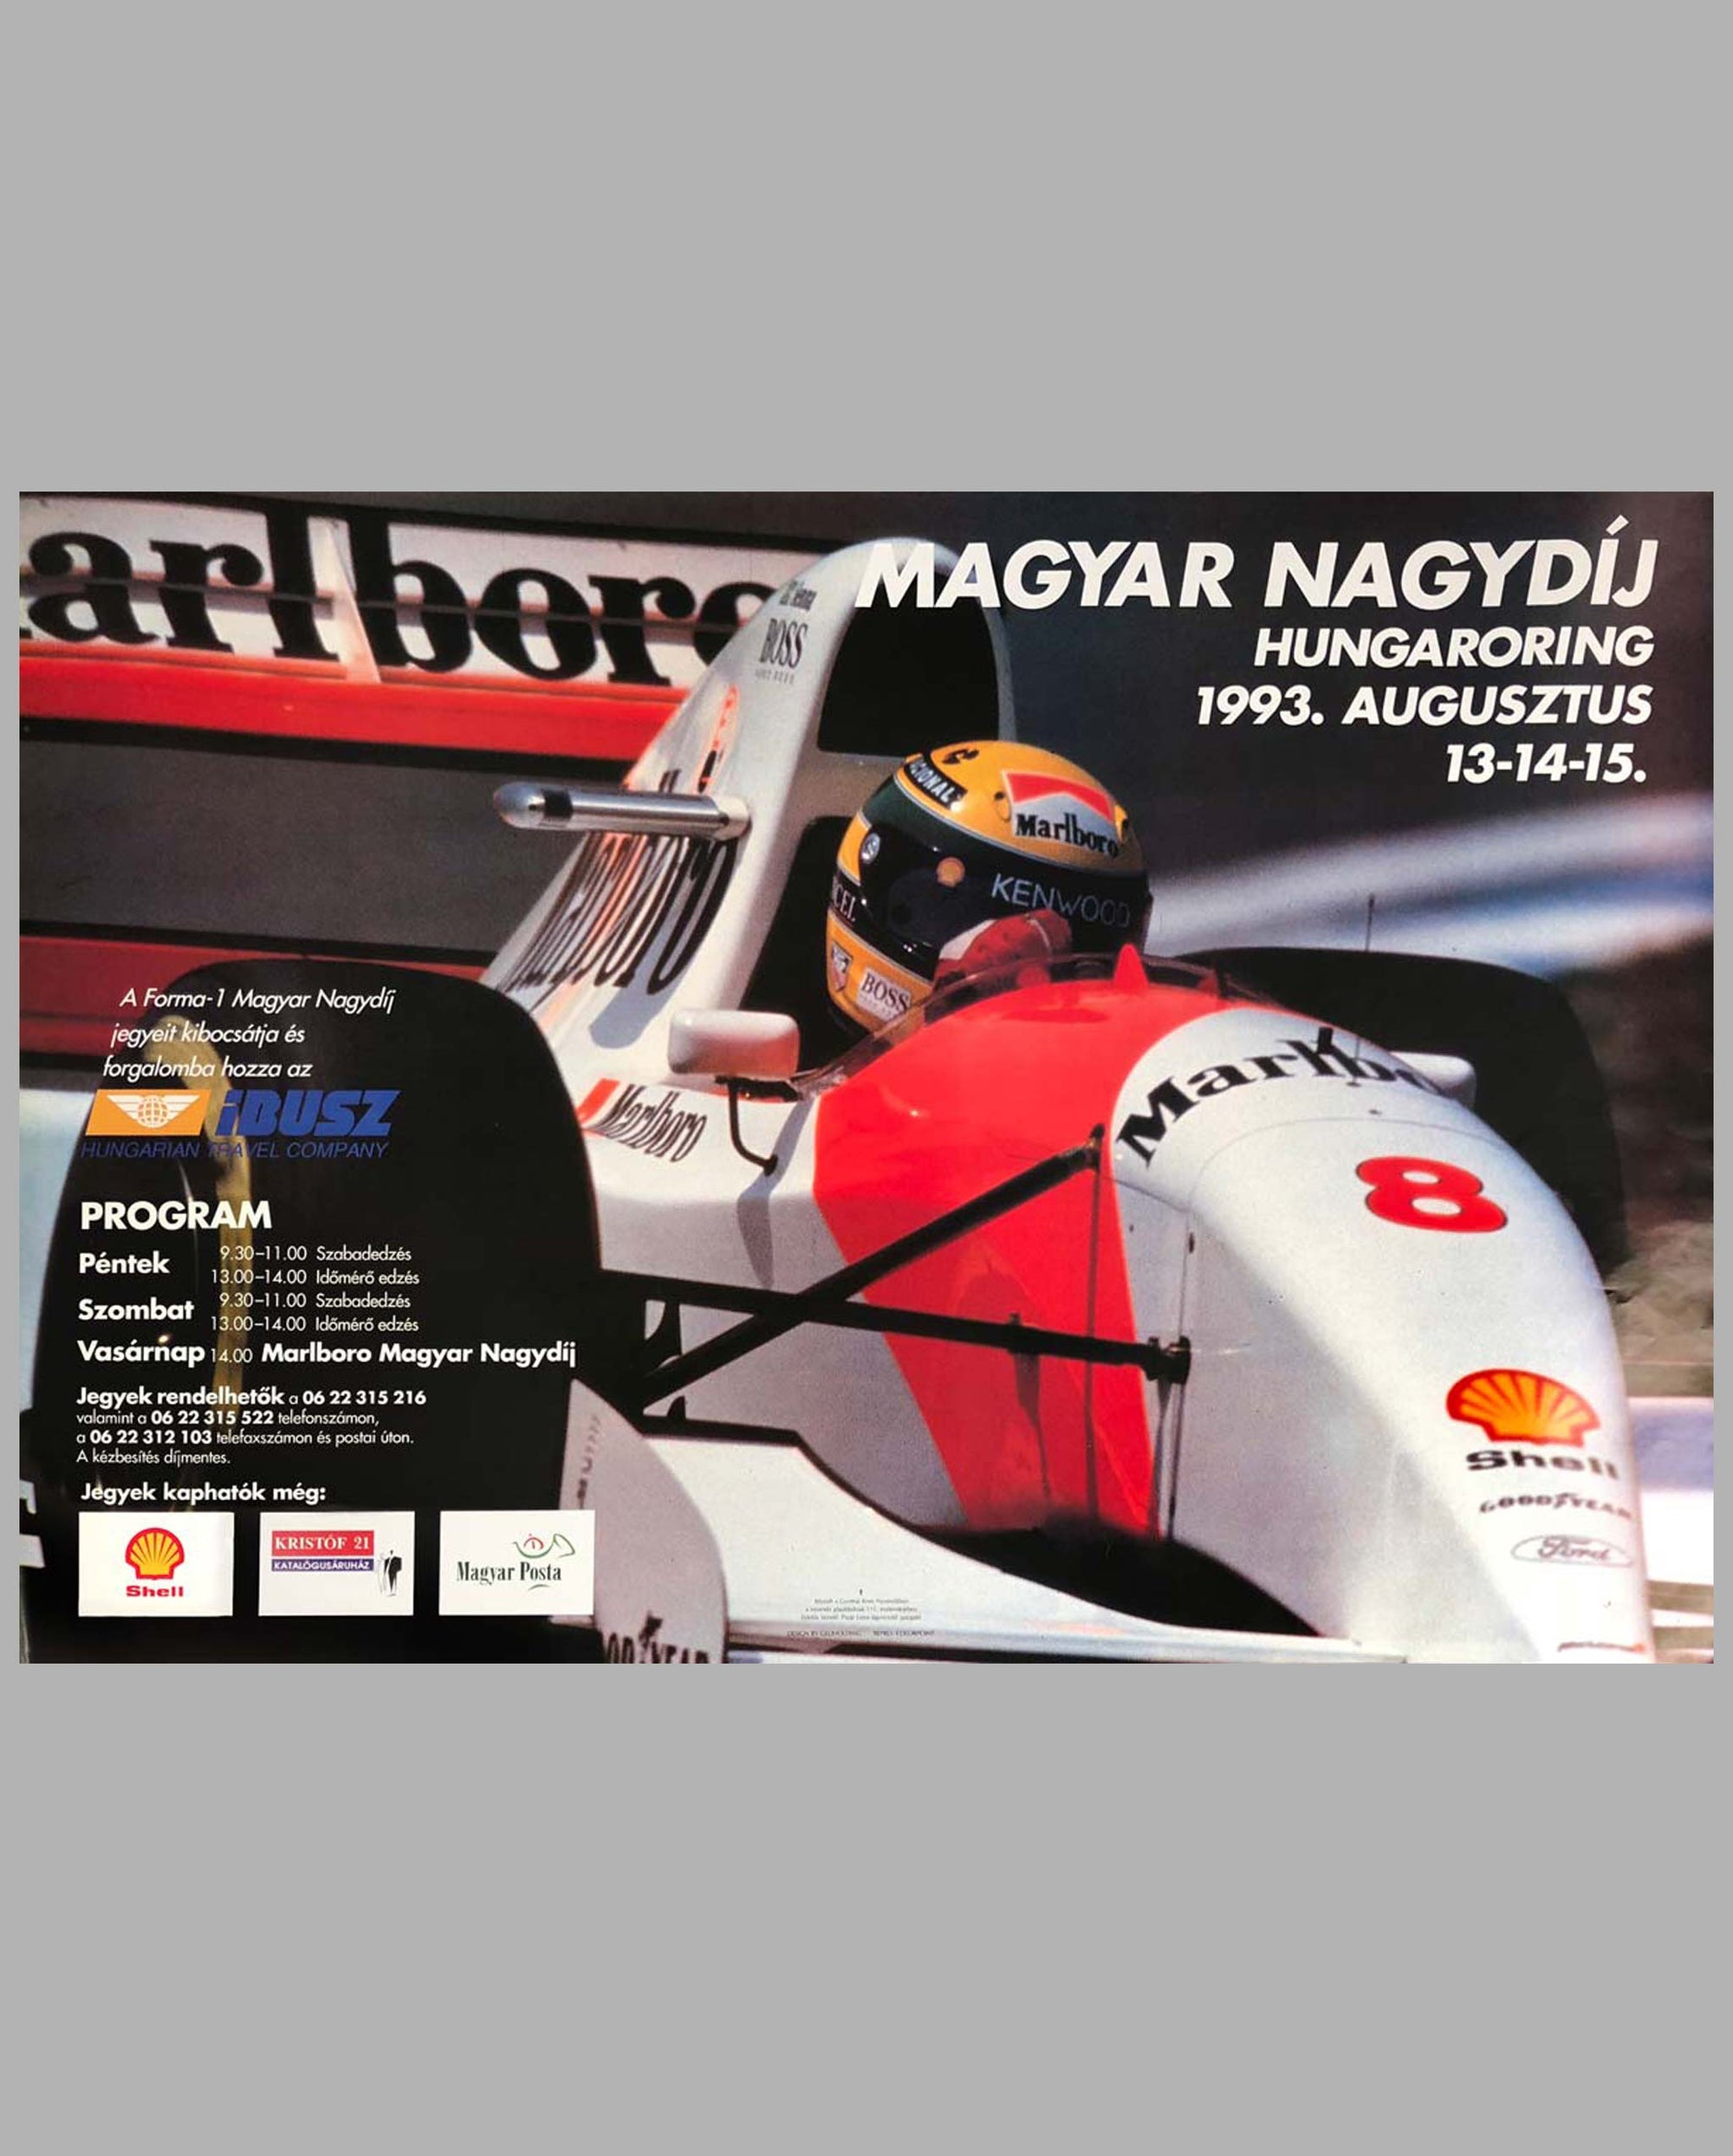 Grand Prix of Hungary 1993 original advertising Poster